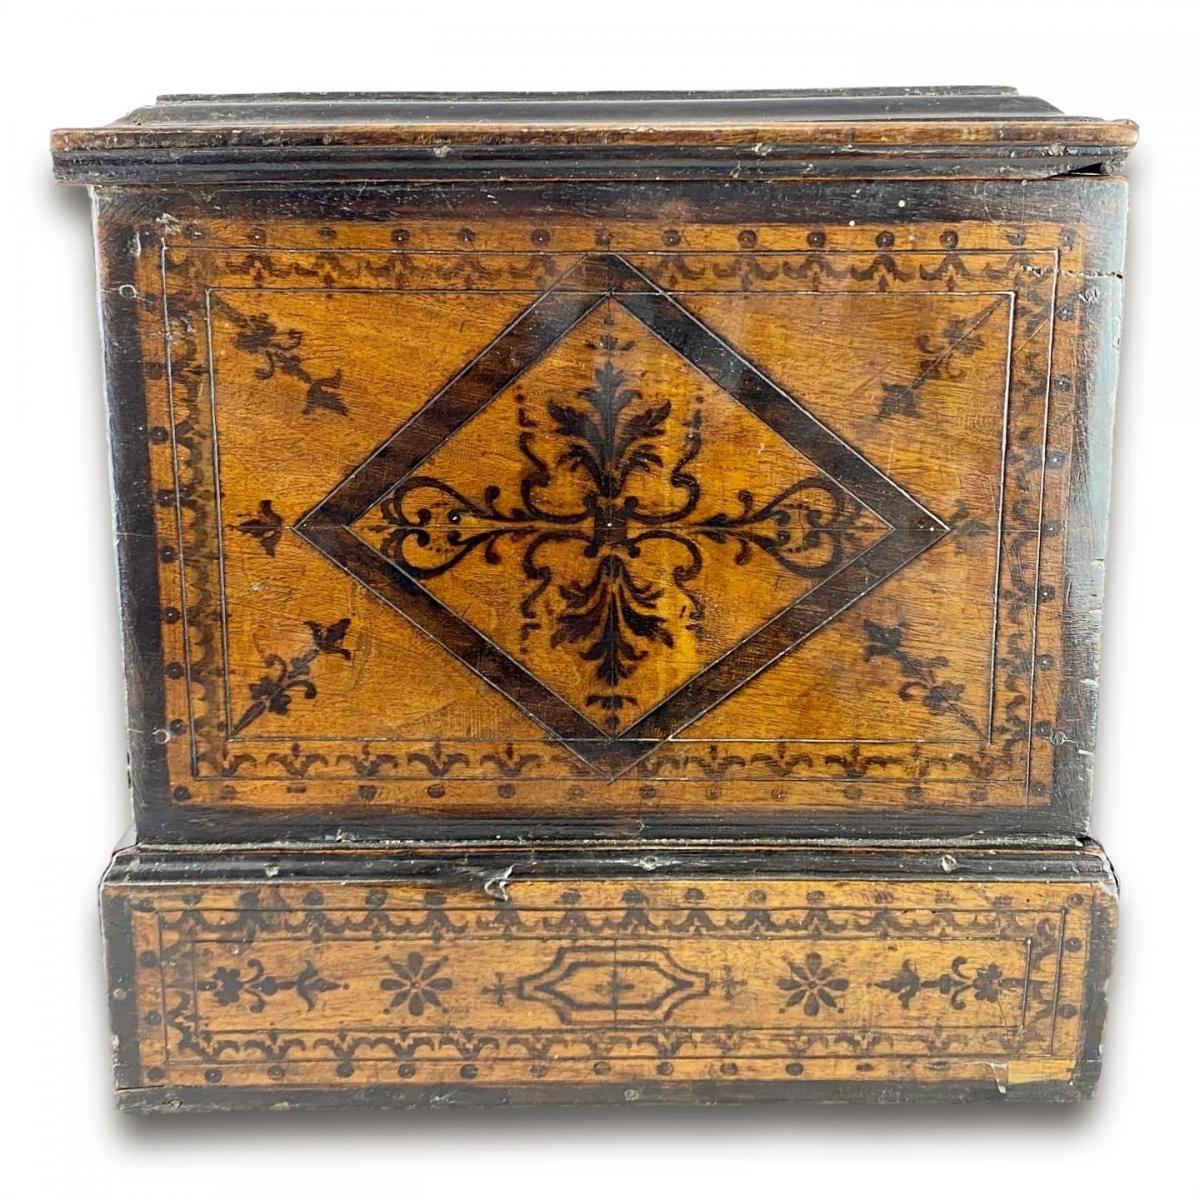 Penwork tea chest. French, mid 18th century